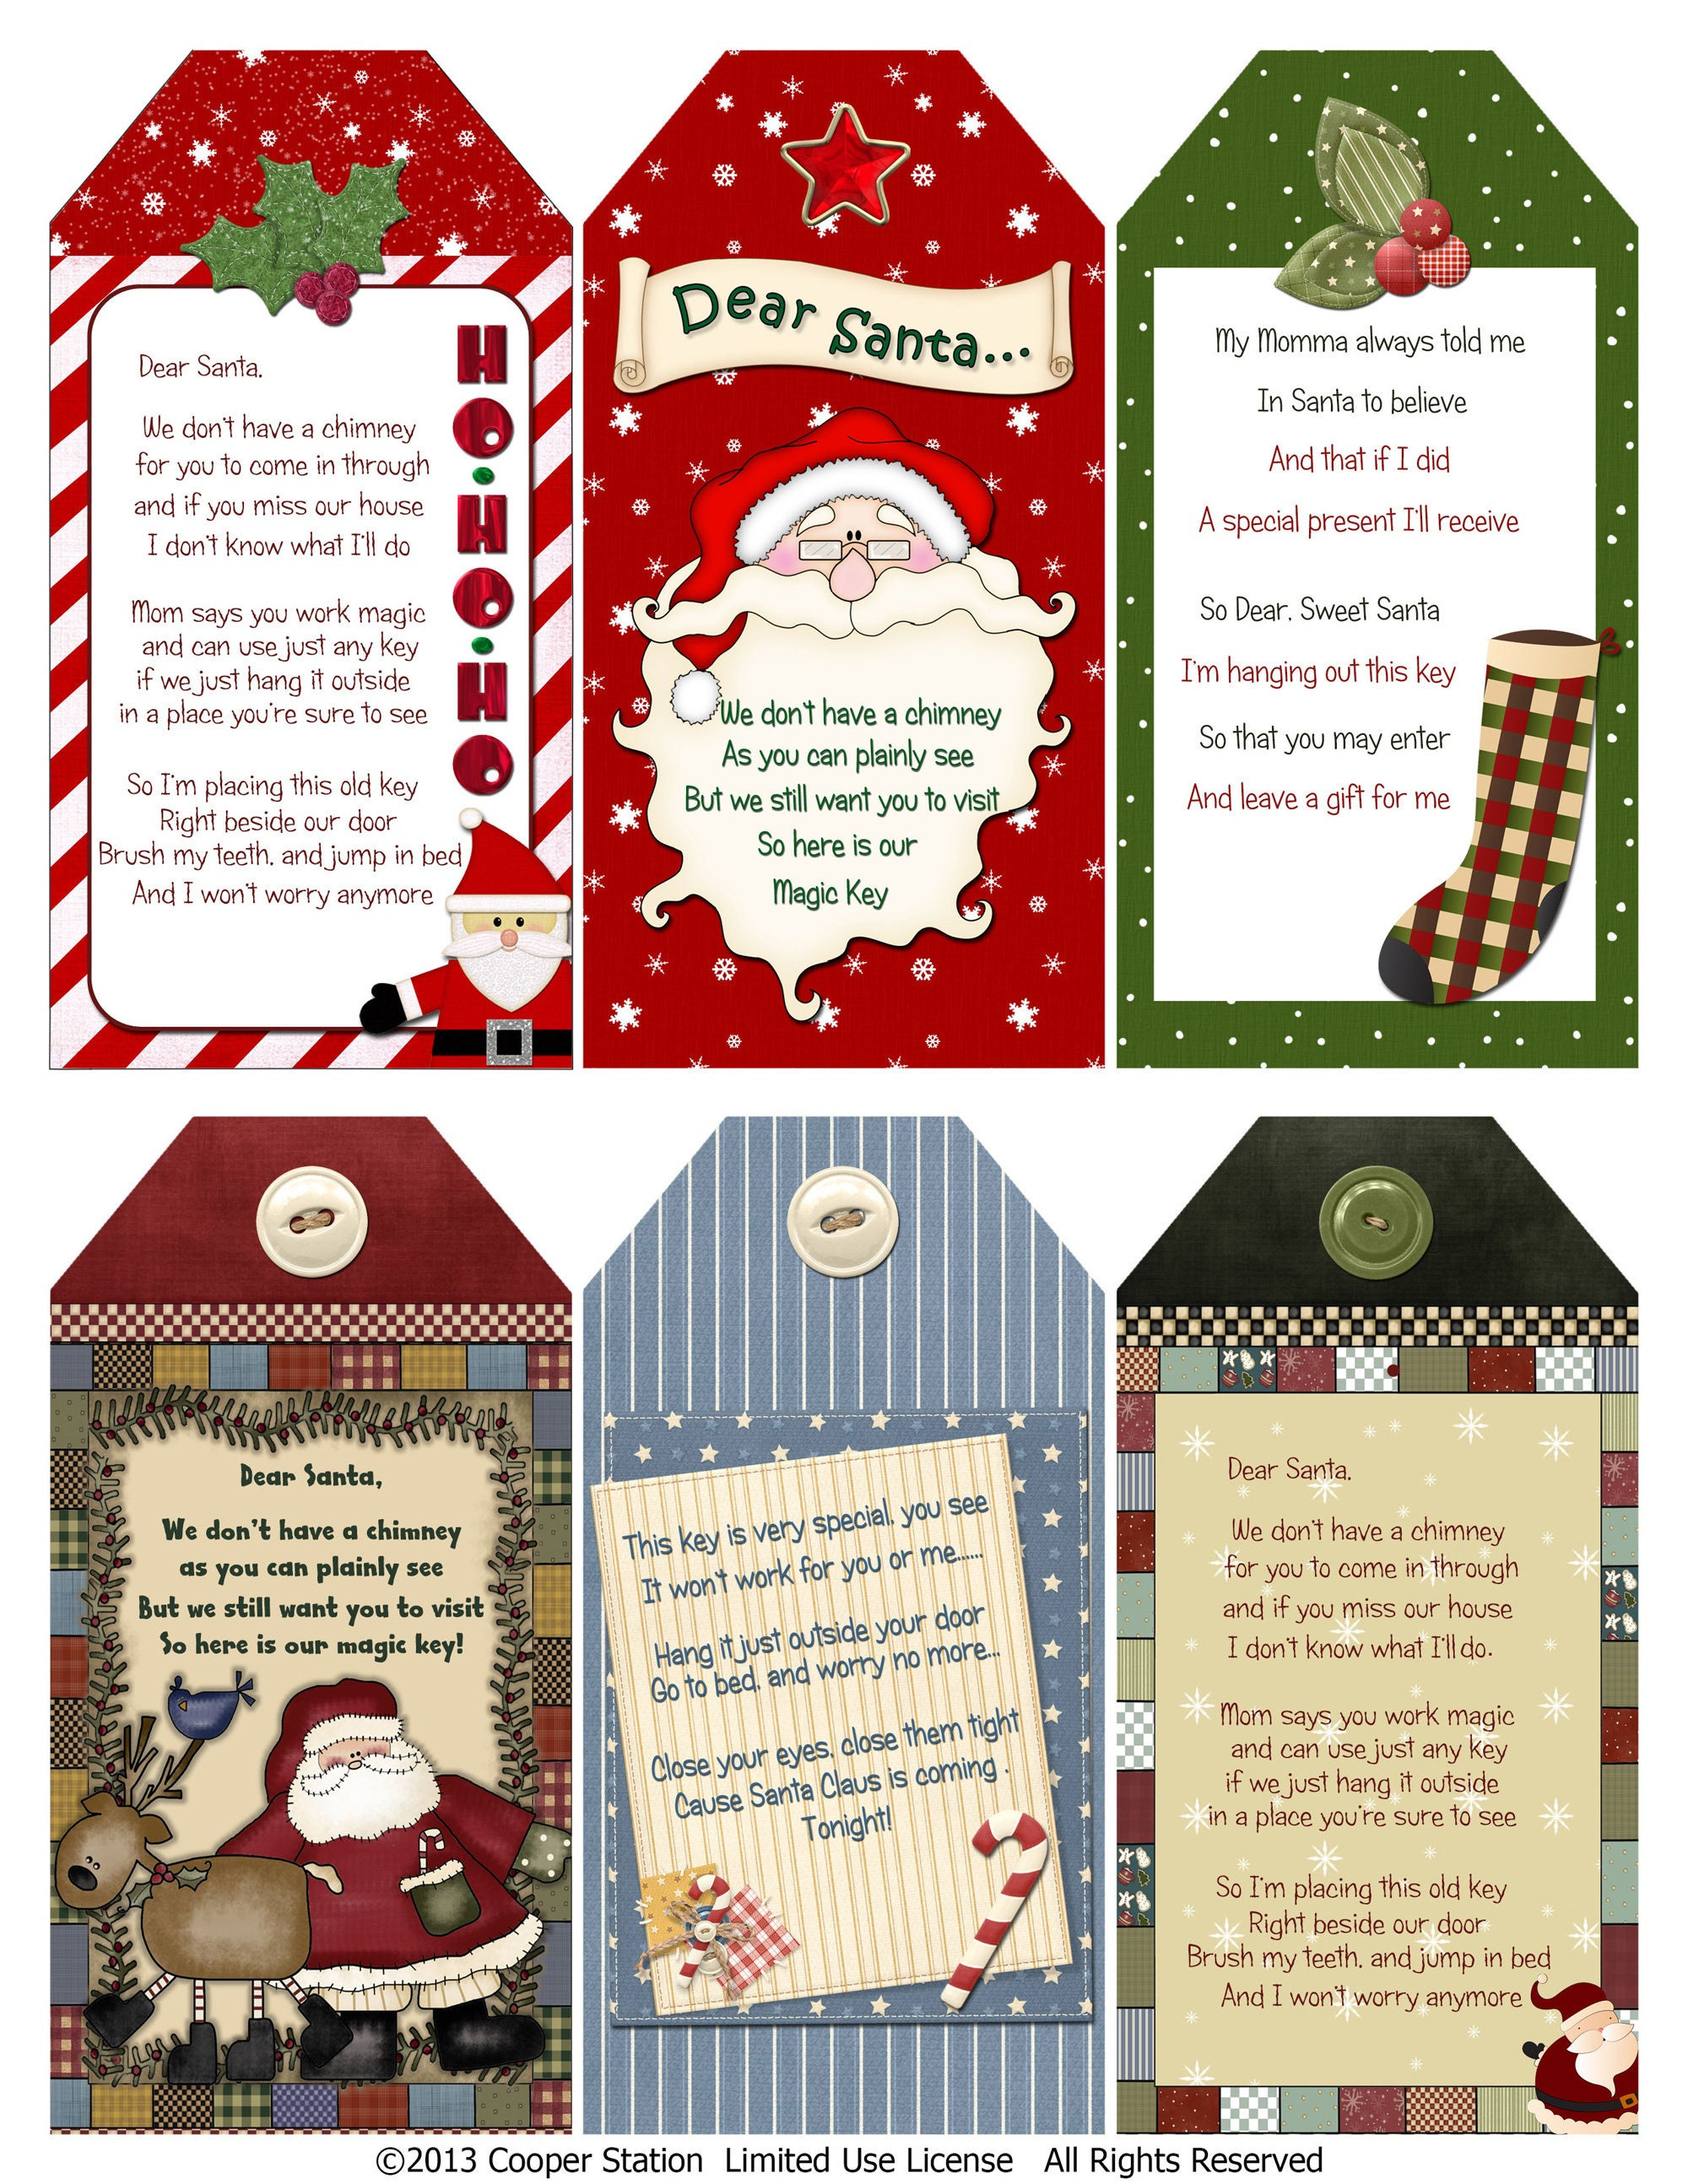 Santa's Magic Key – The Alaska Greeting Card Company